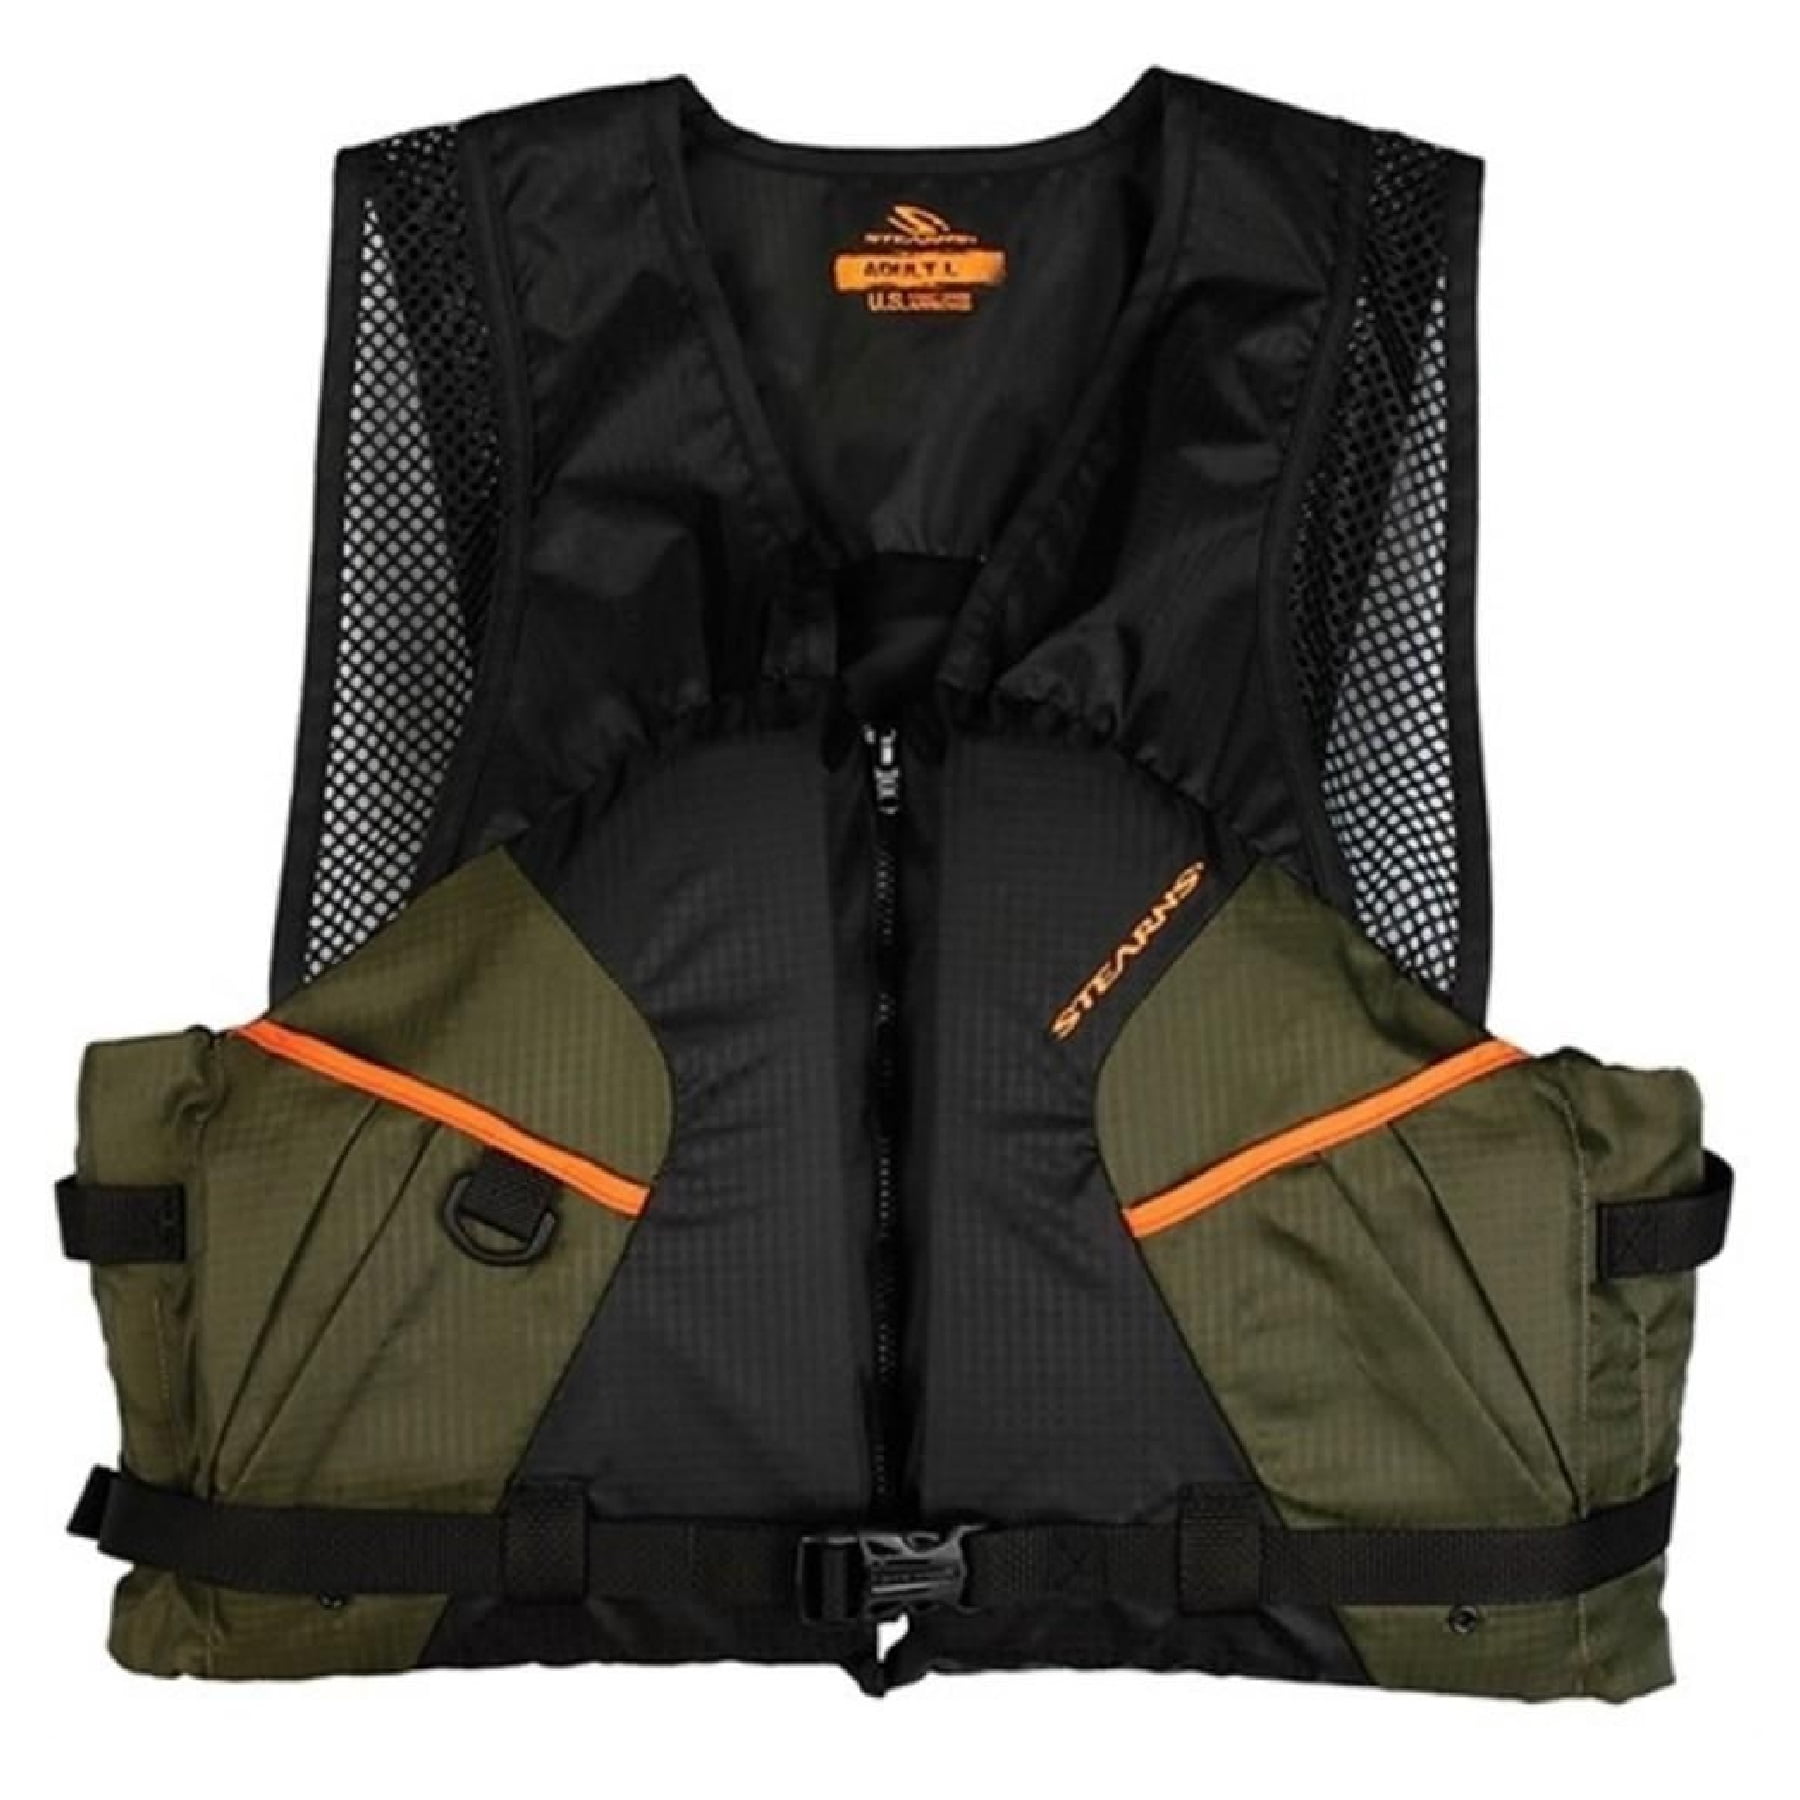 Details about   3 Pack Stearns Size Universal Adult Life Vest Life Jacket Orange 